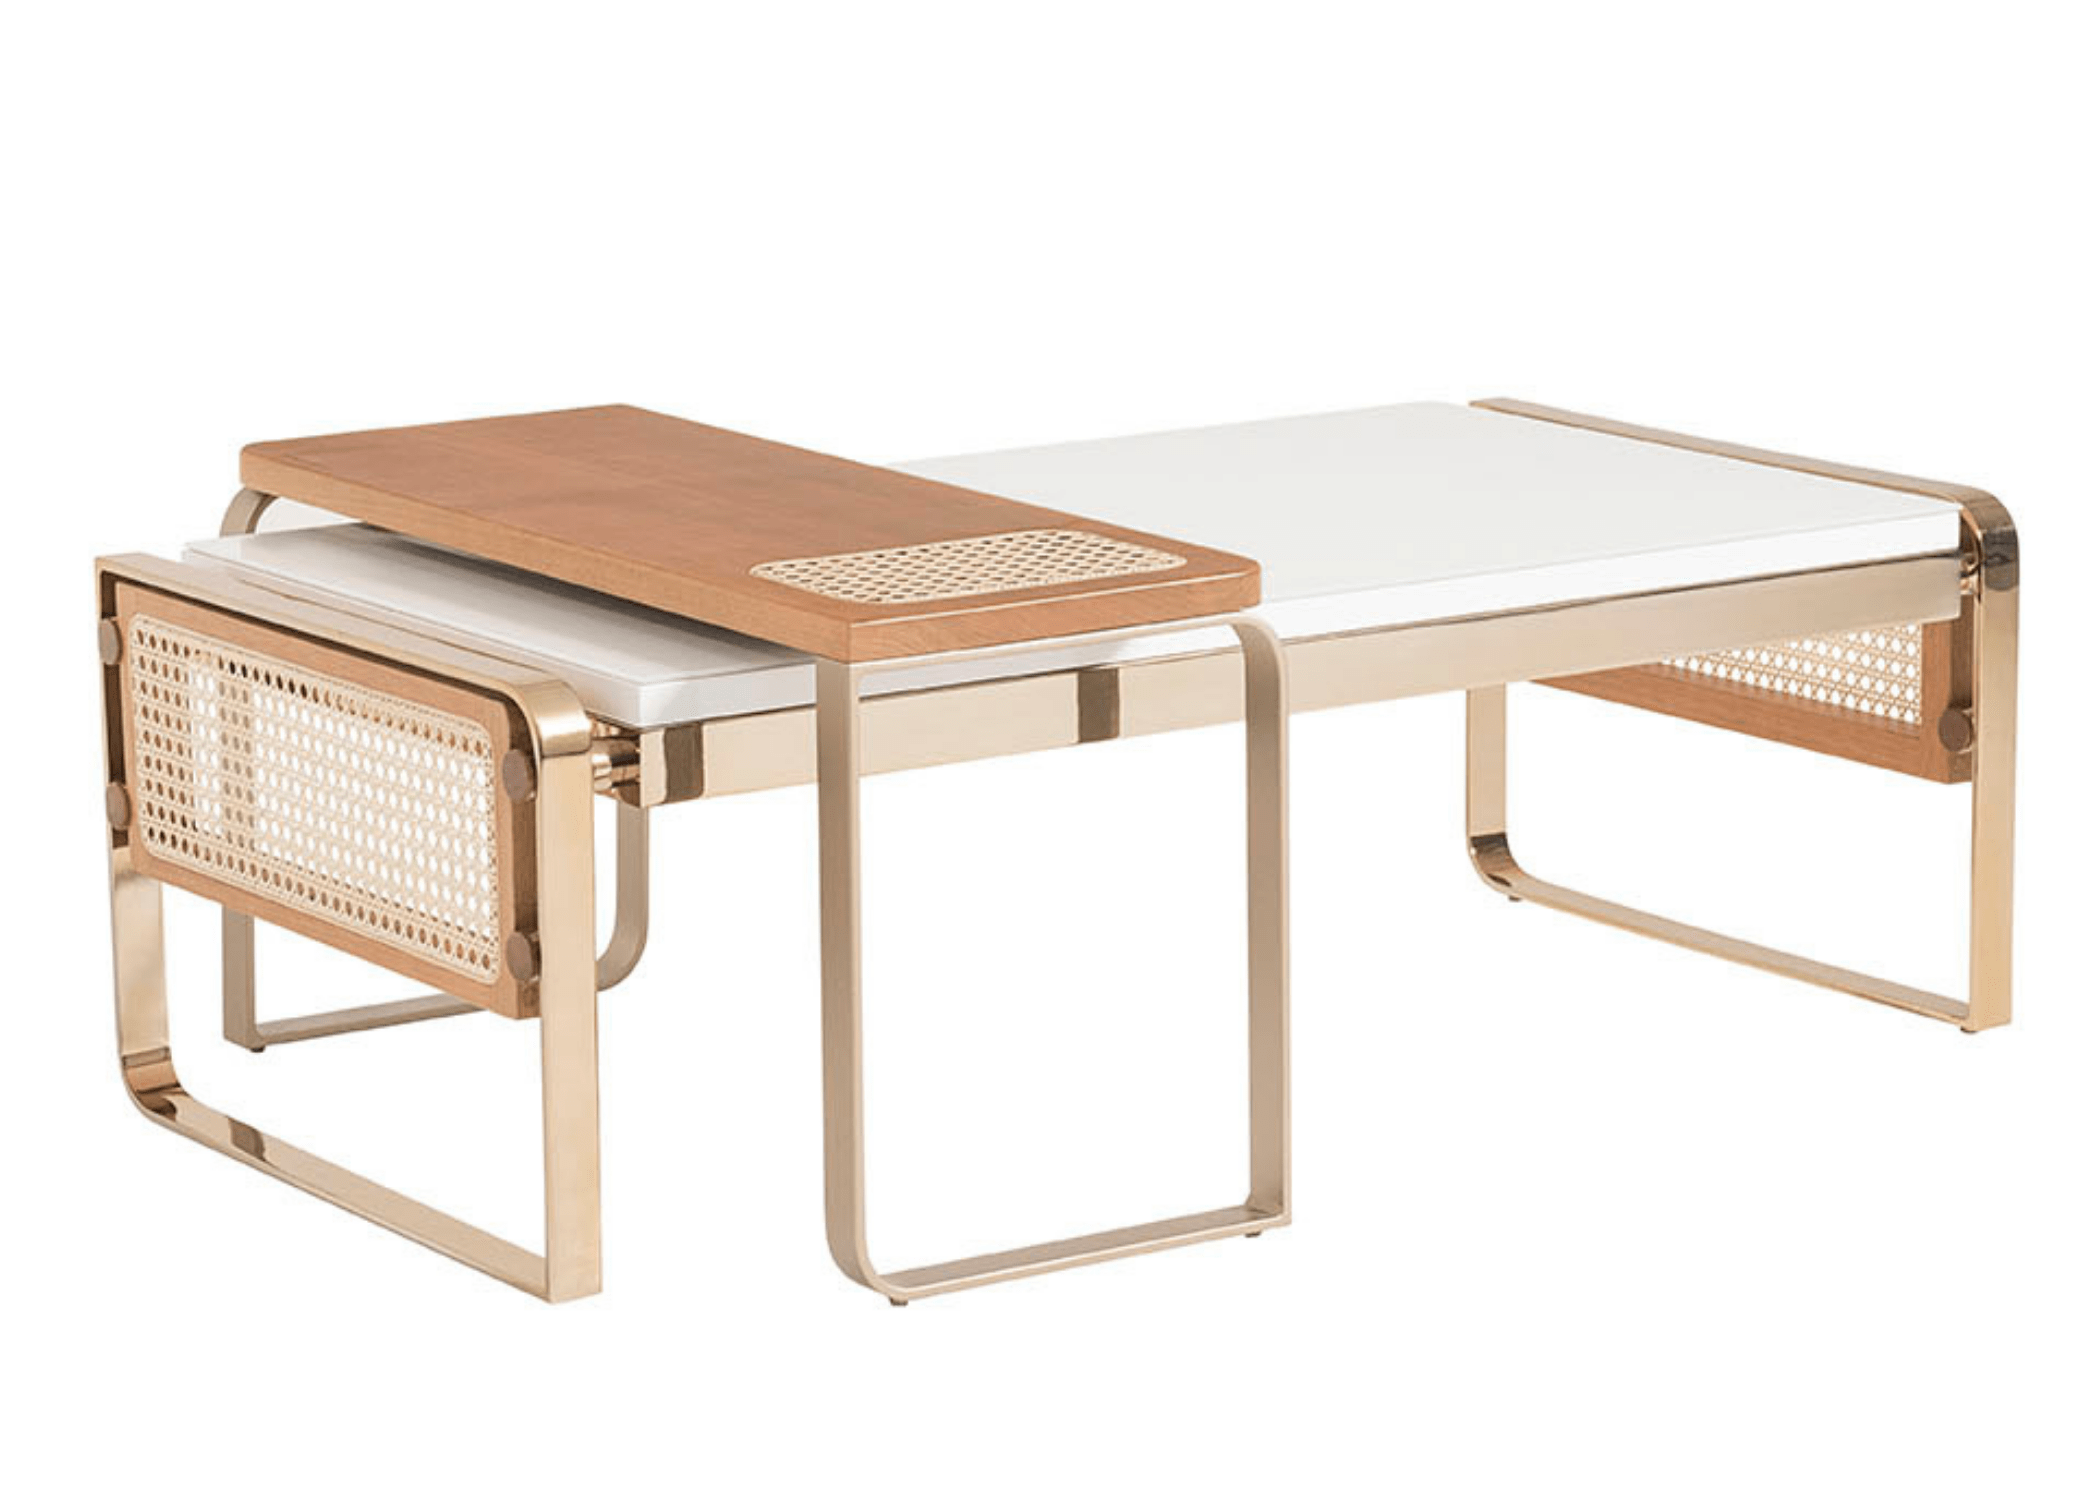 Conjunto de mesas do centro Ari: Design contemporâneo para transformar seu ambiente.